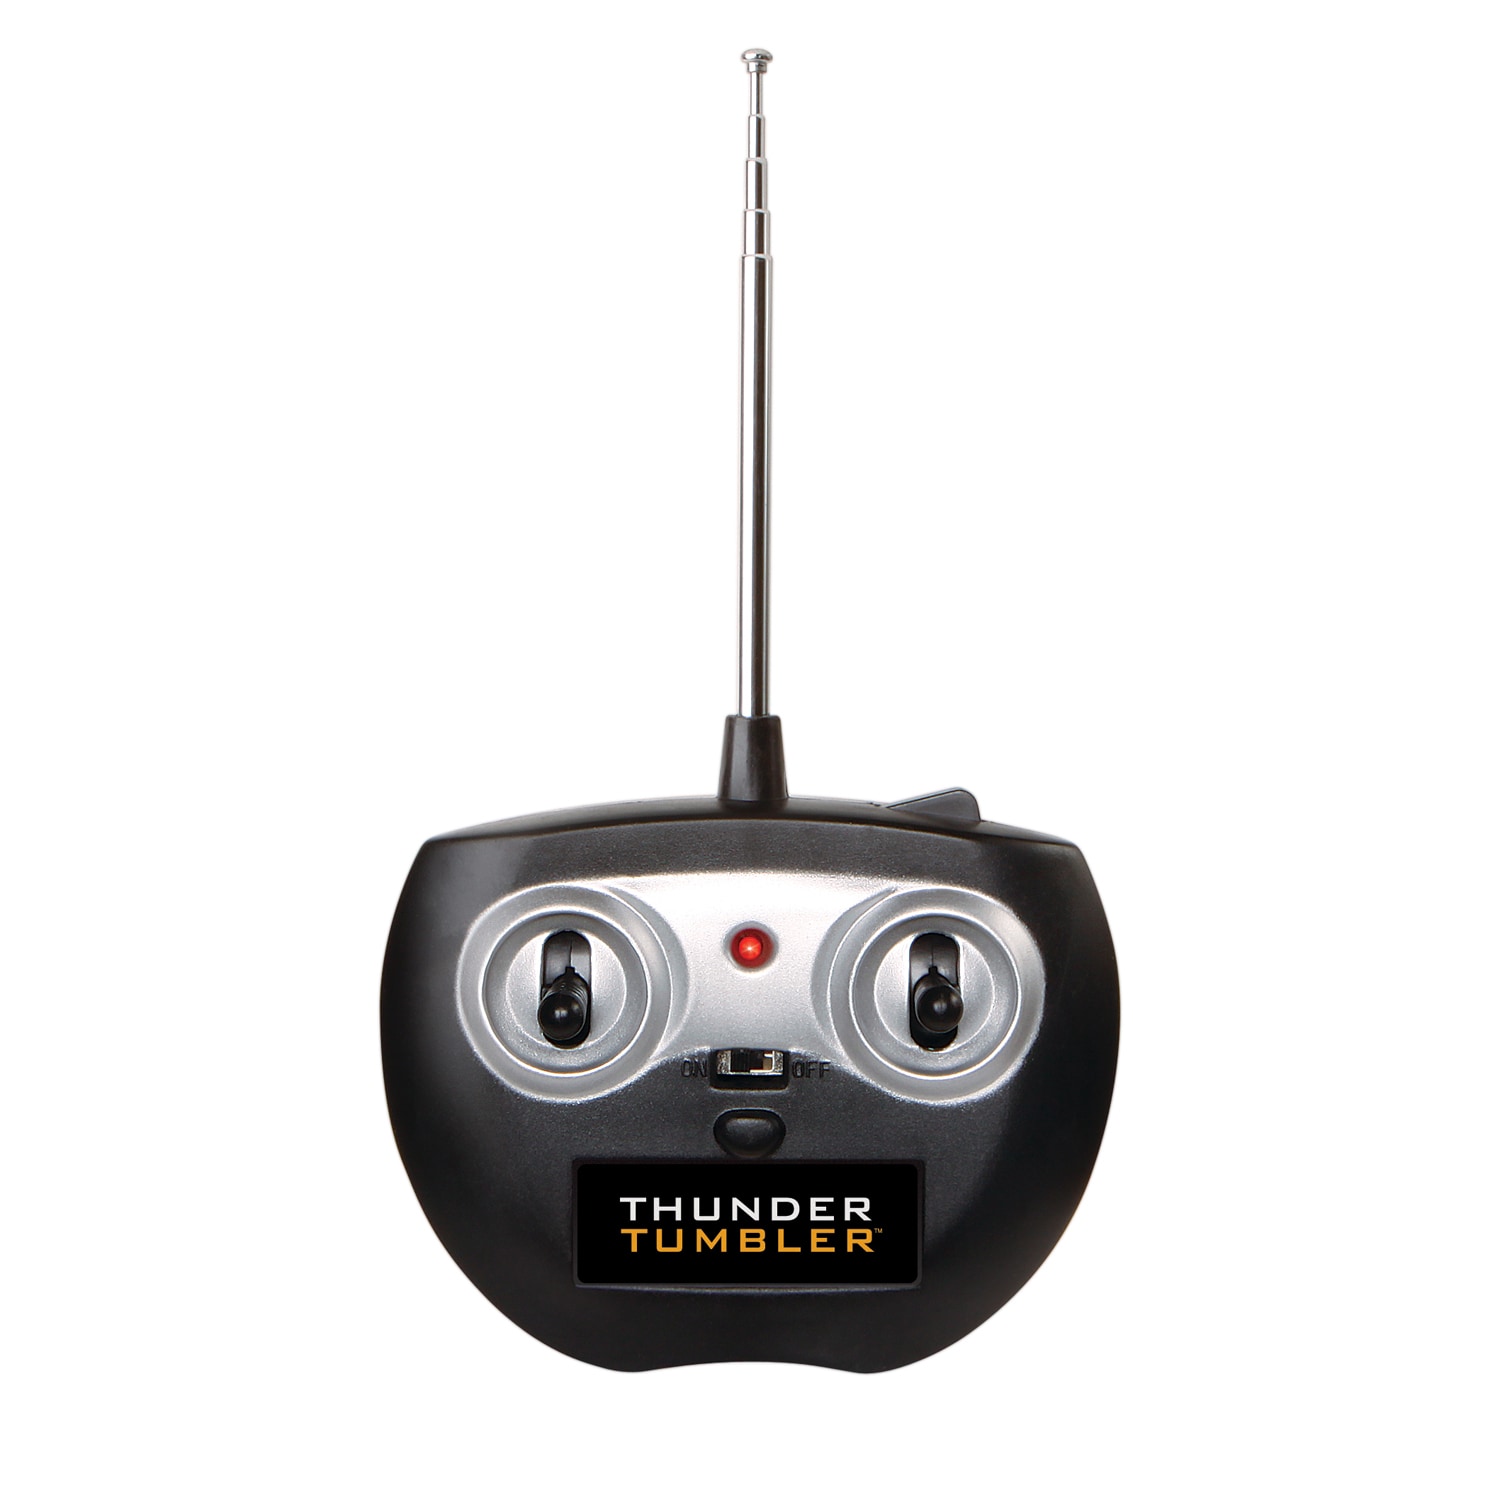 thunder tumbler remote control